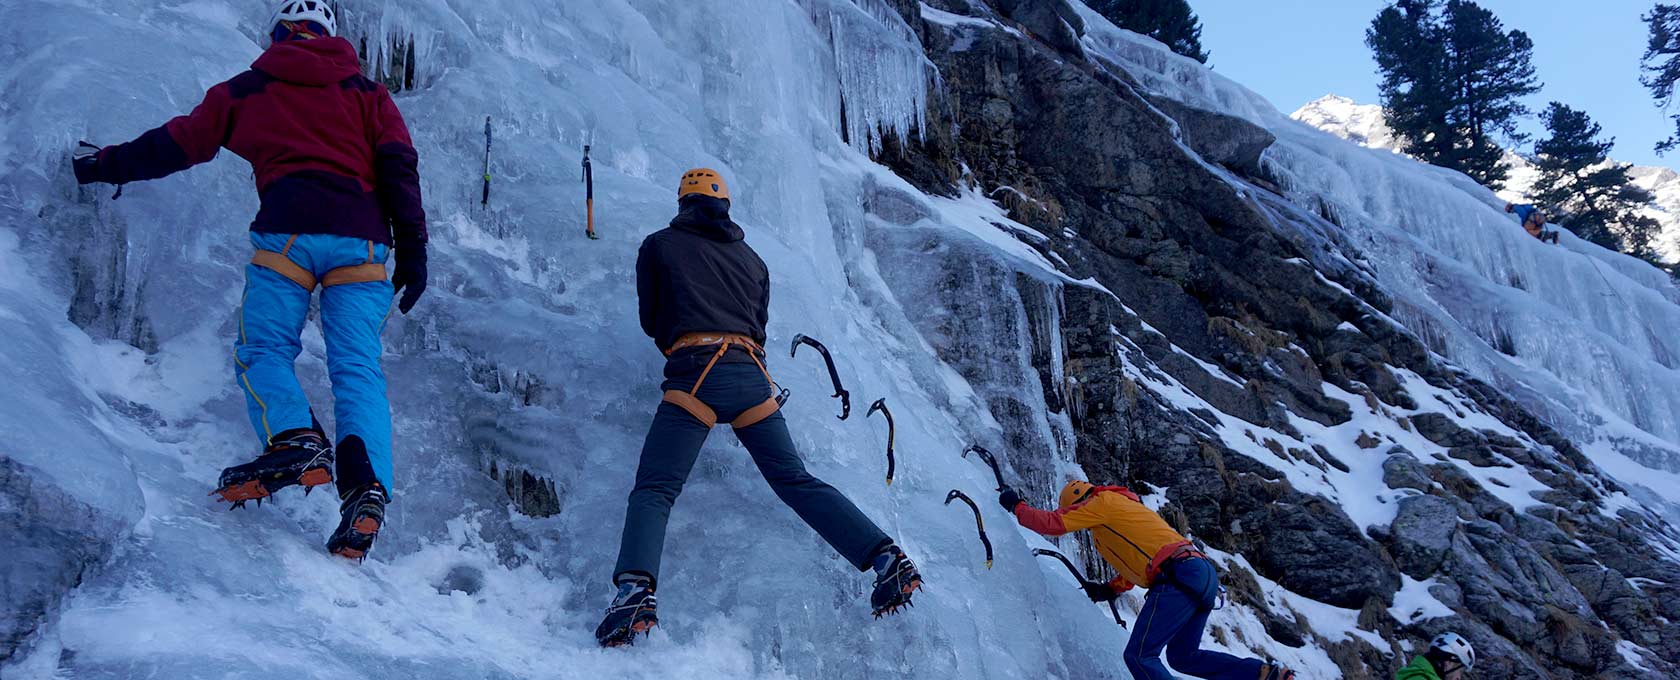 beginners - ice climbing level 1